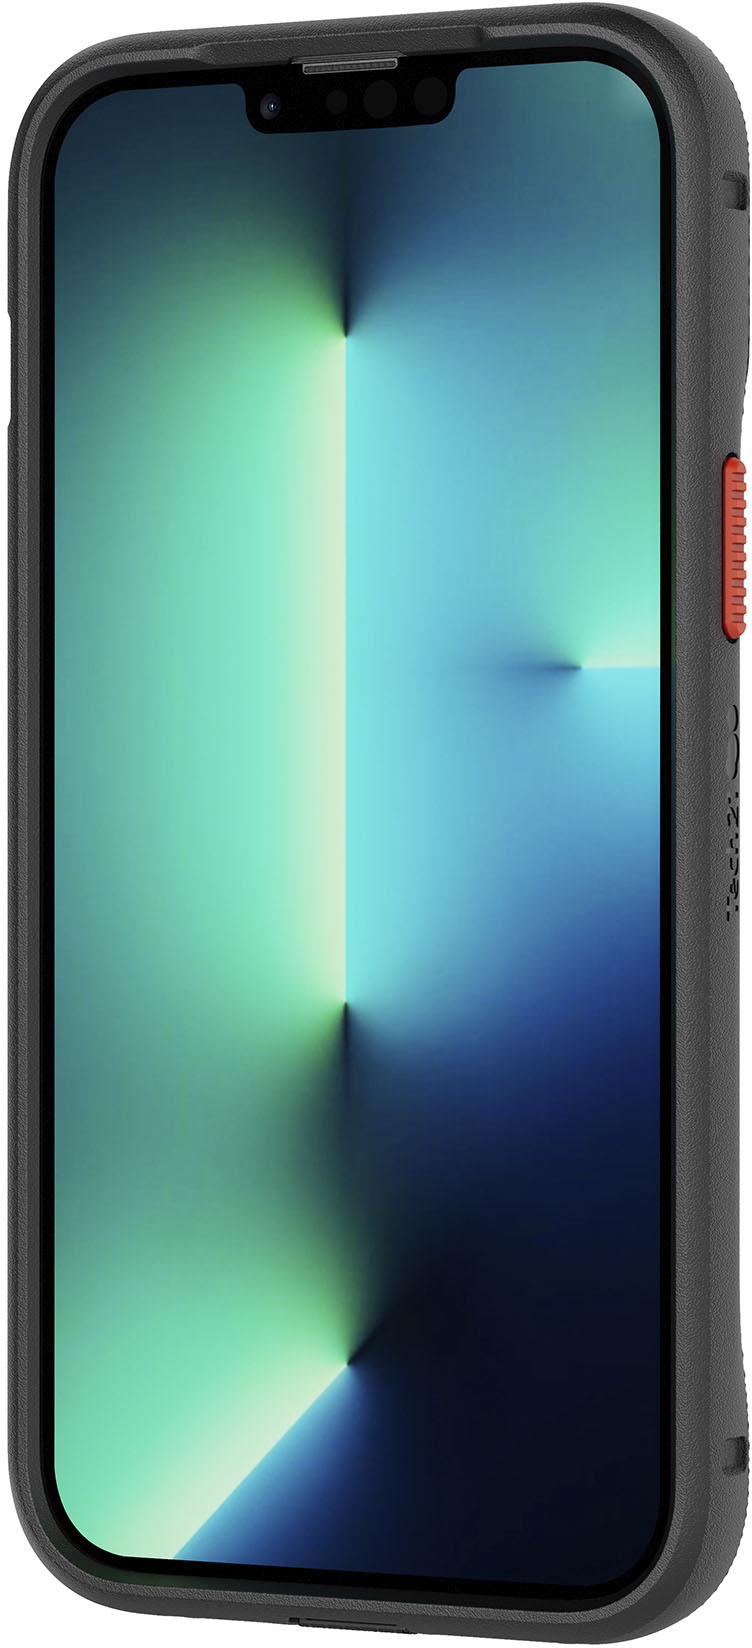 Evo Max - Apple iPhone 13 Pro Max Case - Black